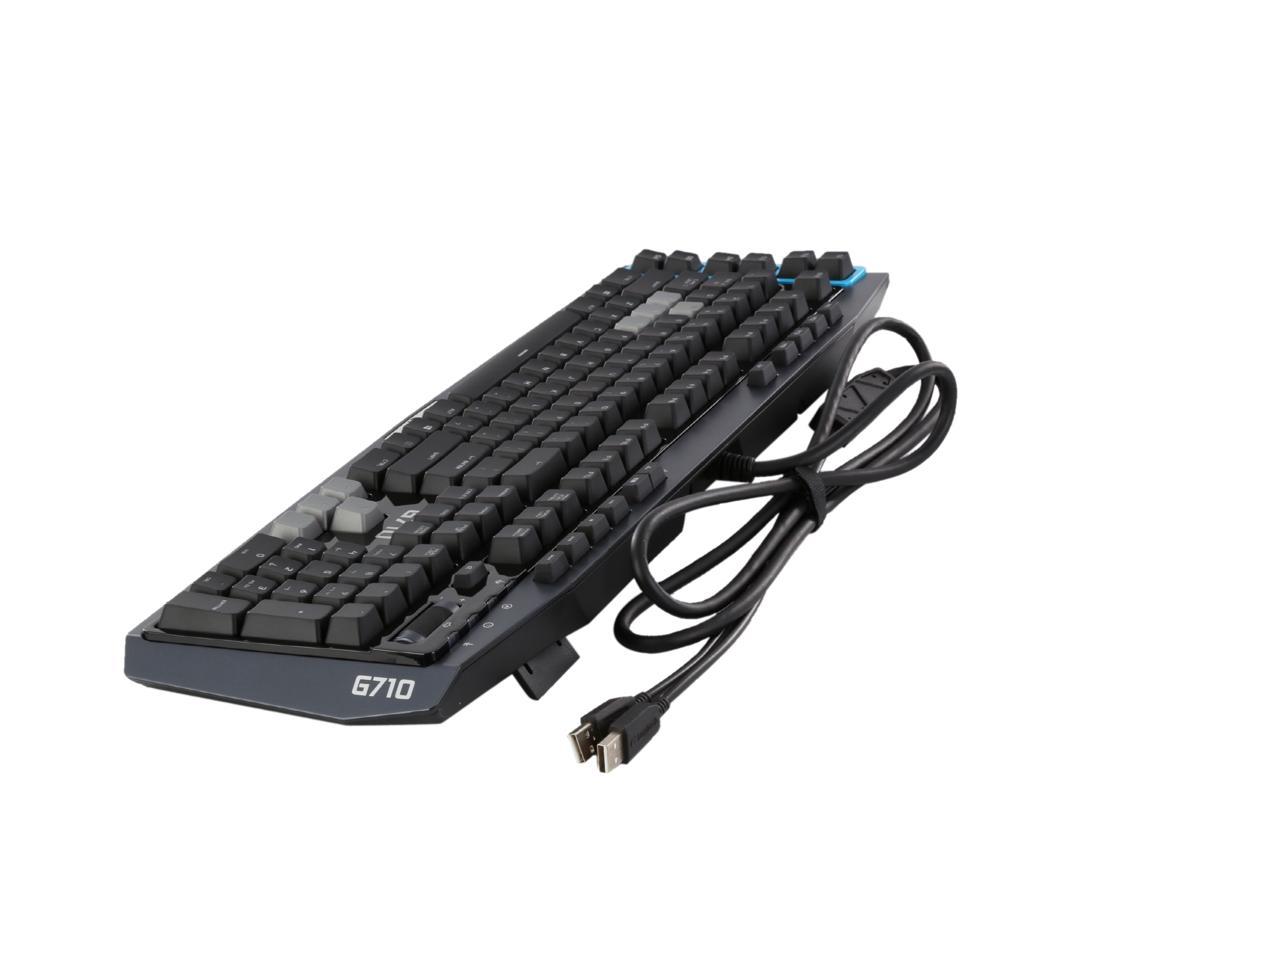 Logitech G710+ Mechanical Gaming Keyboard Review | Custom PC Review